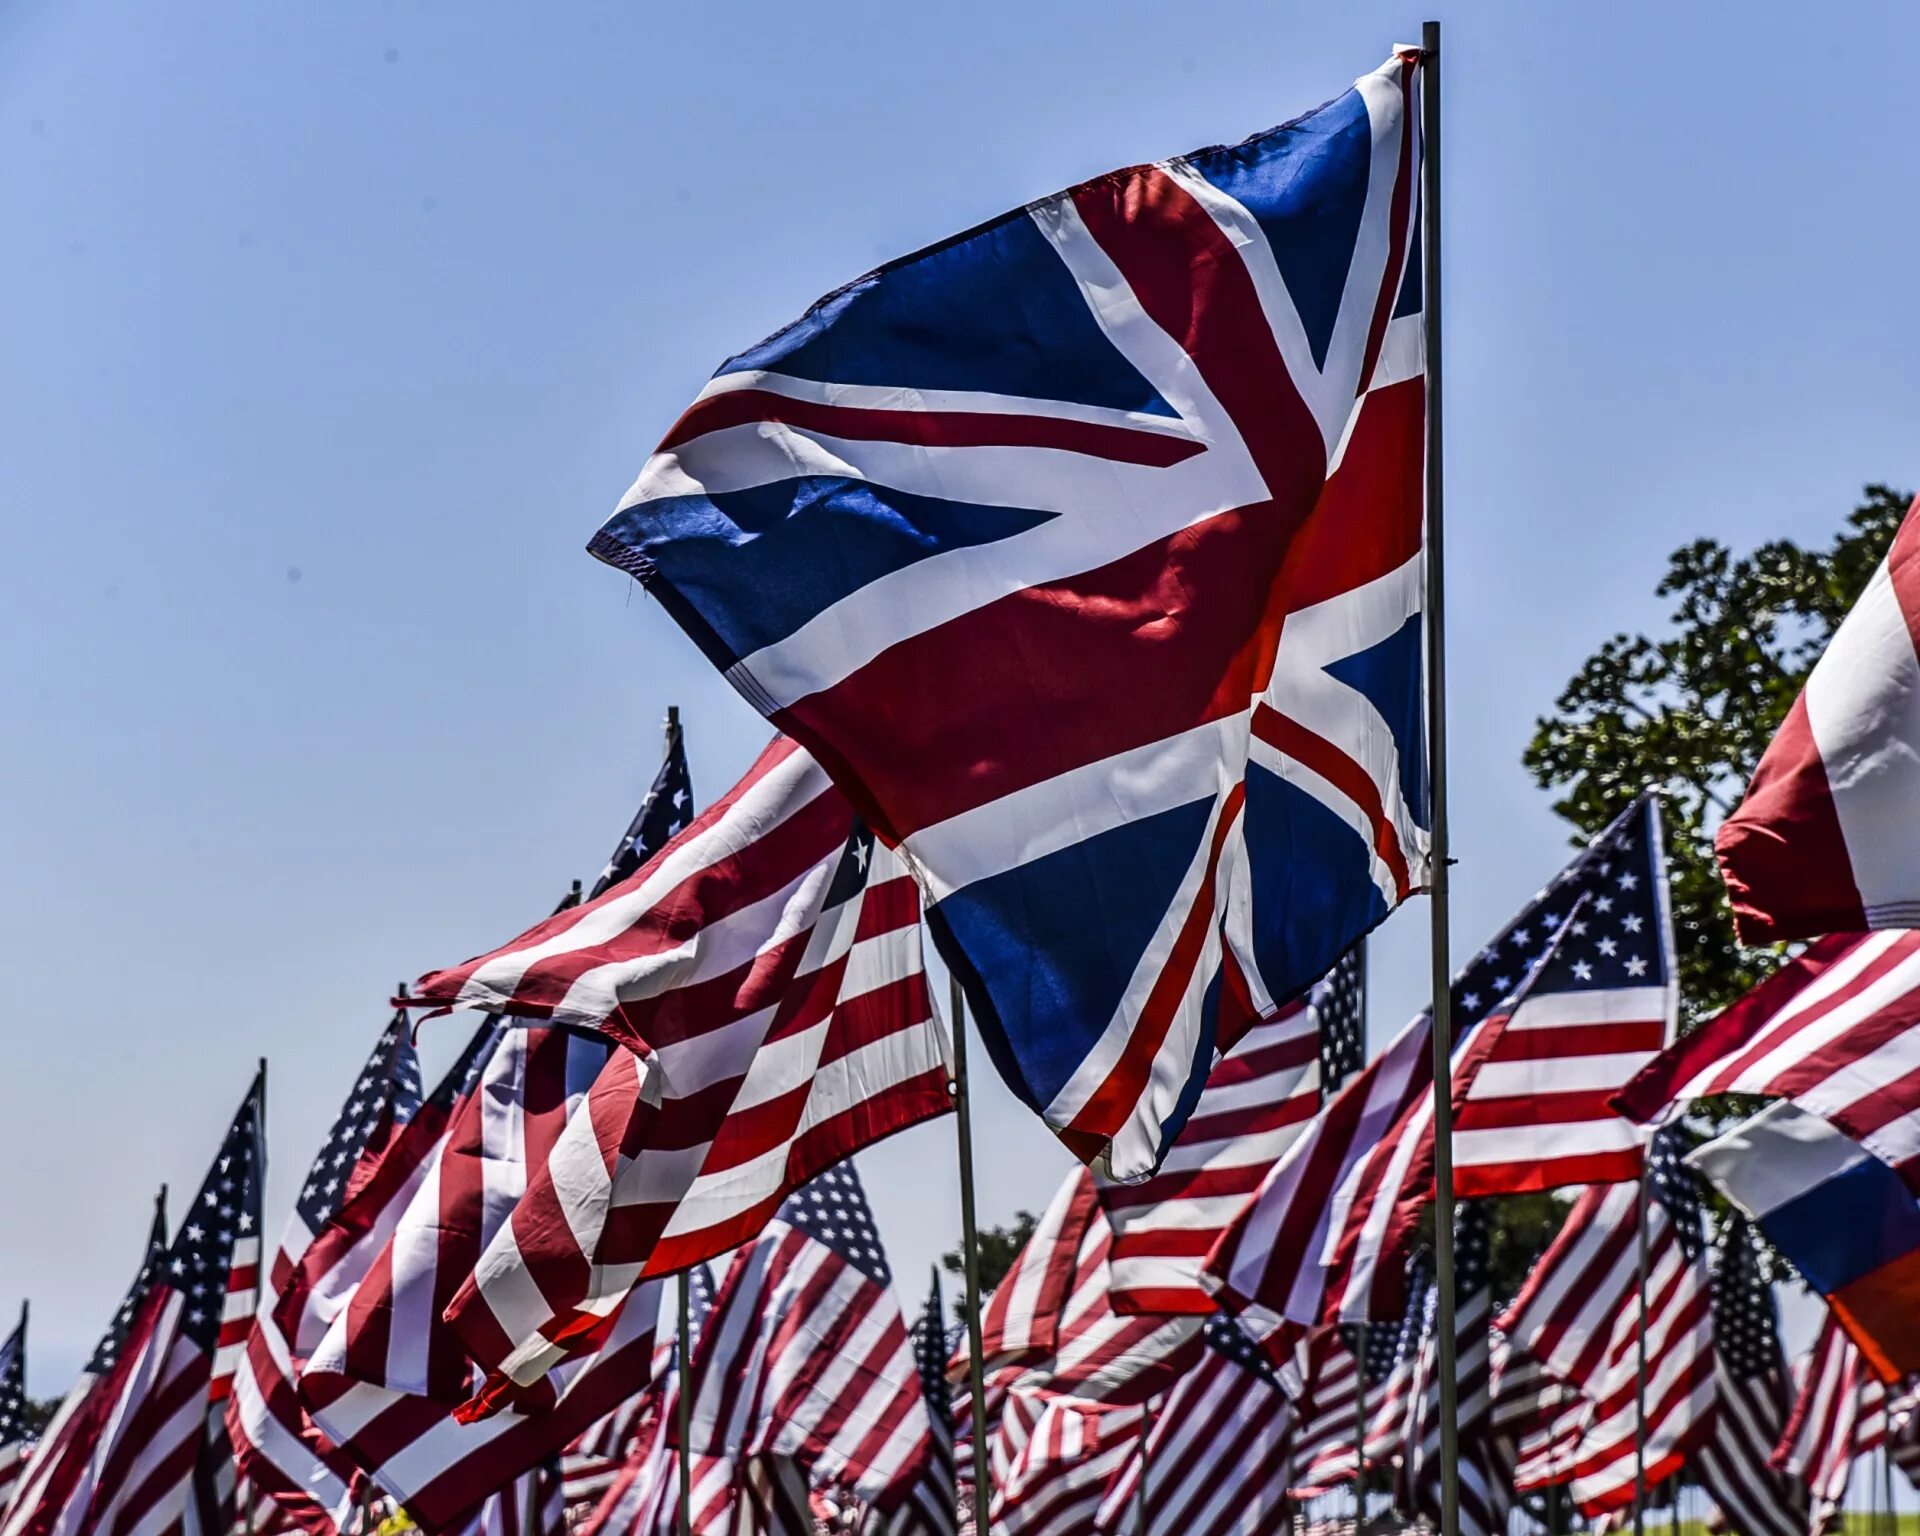 Britain is a nation. Флаг великобританской Америки. Англия США. Америка и Британия. Британия против США.